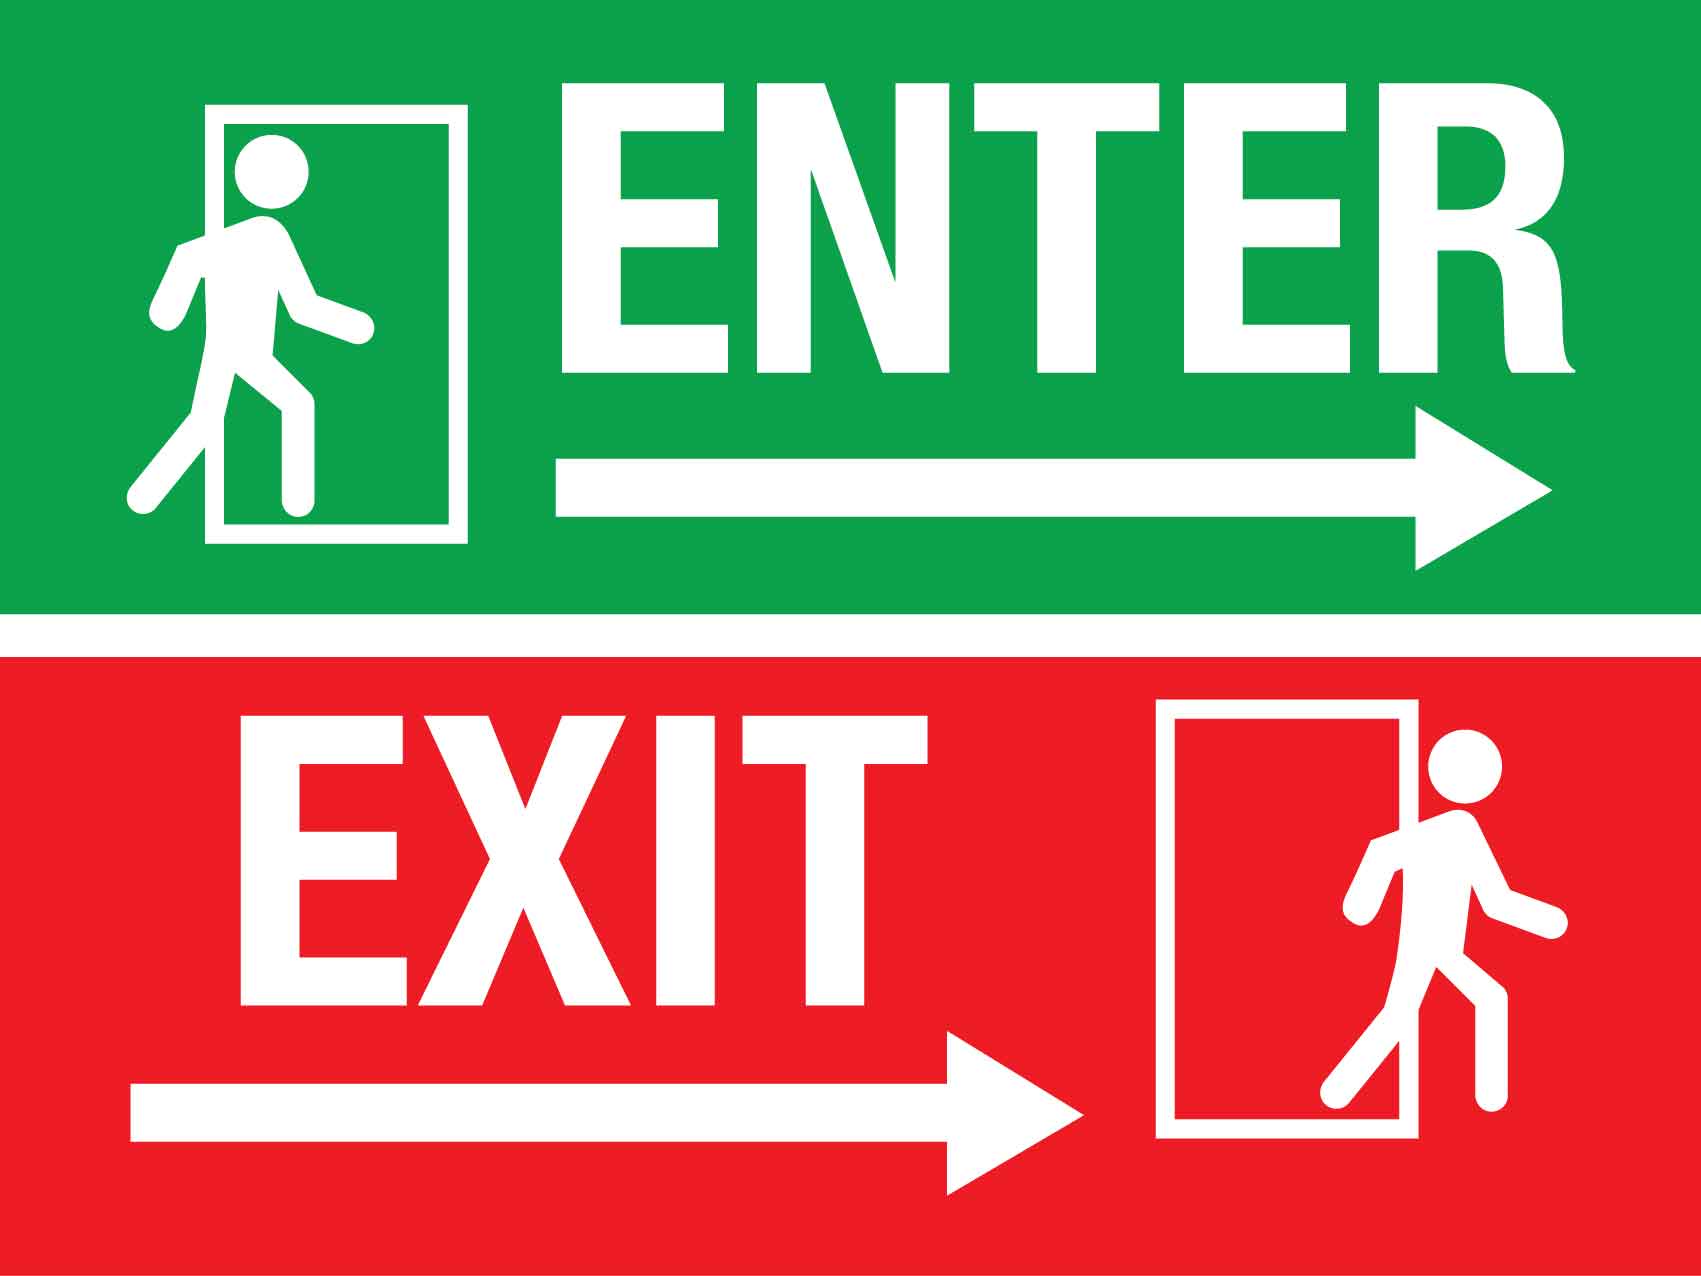 enter-exit-signs-ubicaciondepersonas-cdmx-gob-mx